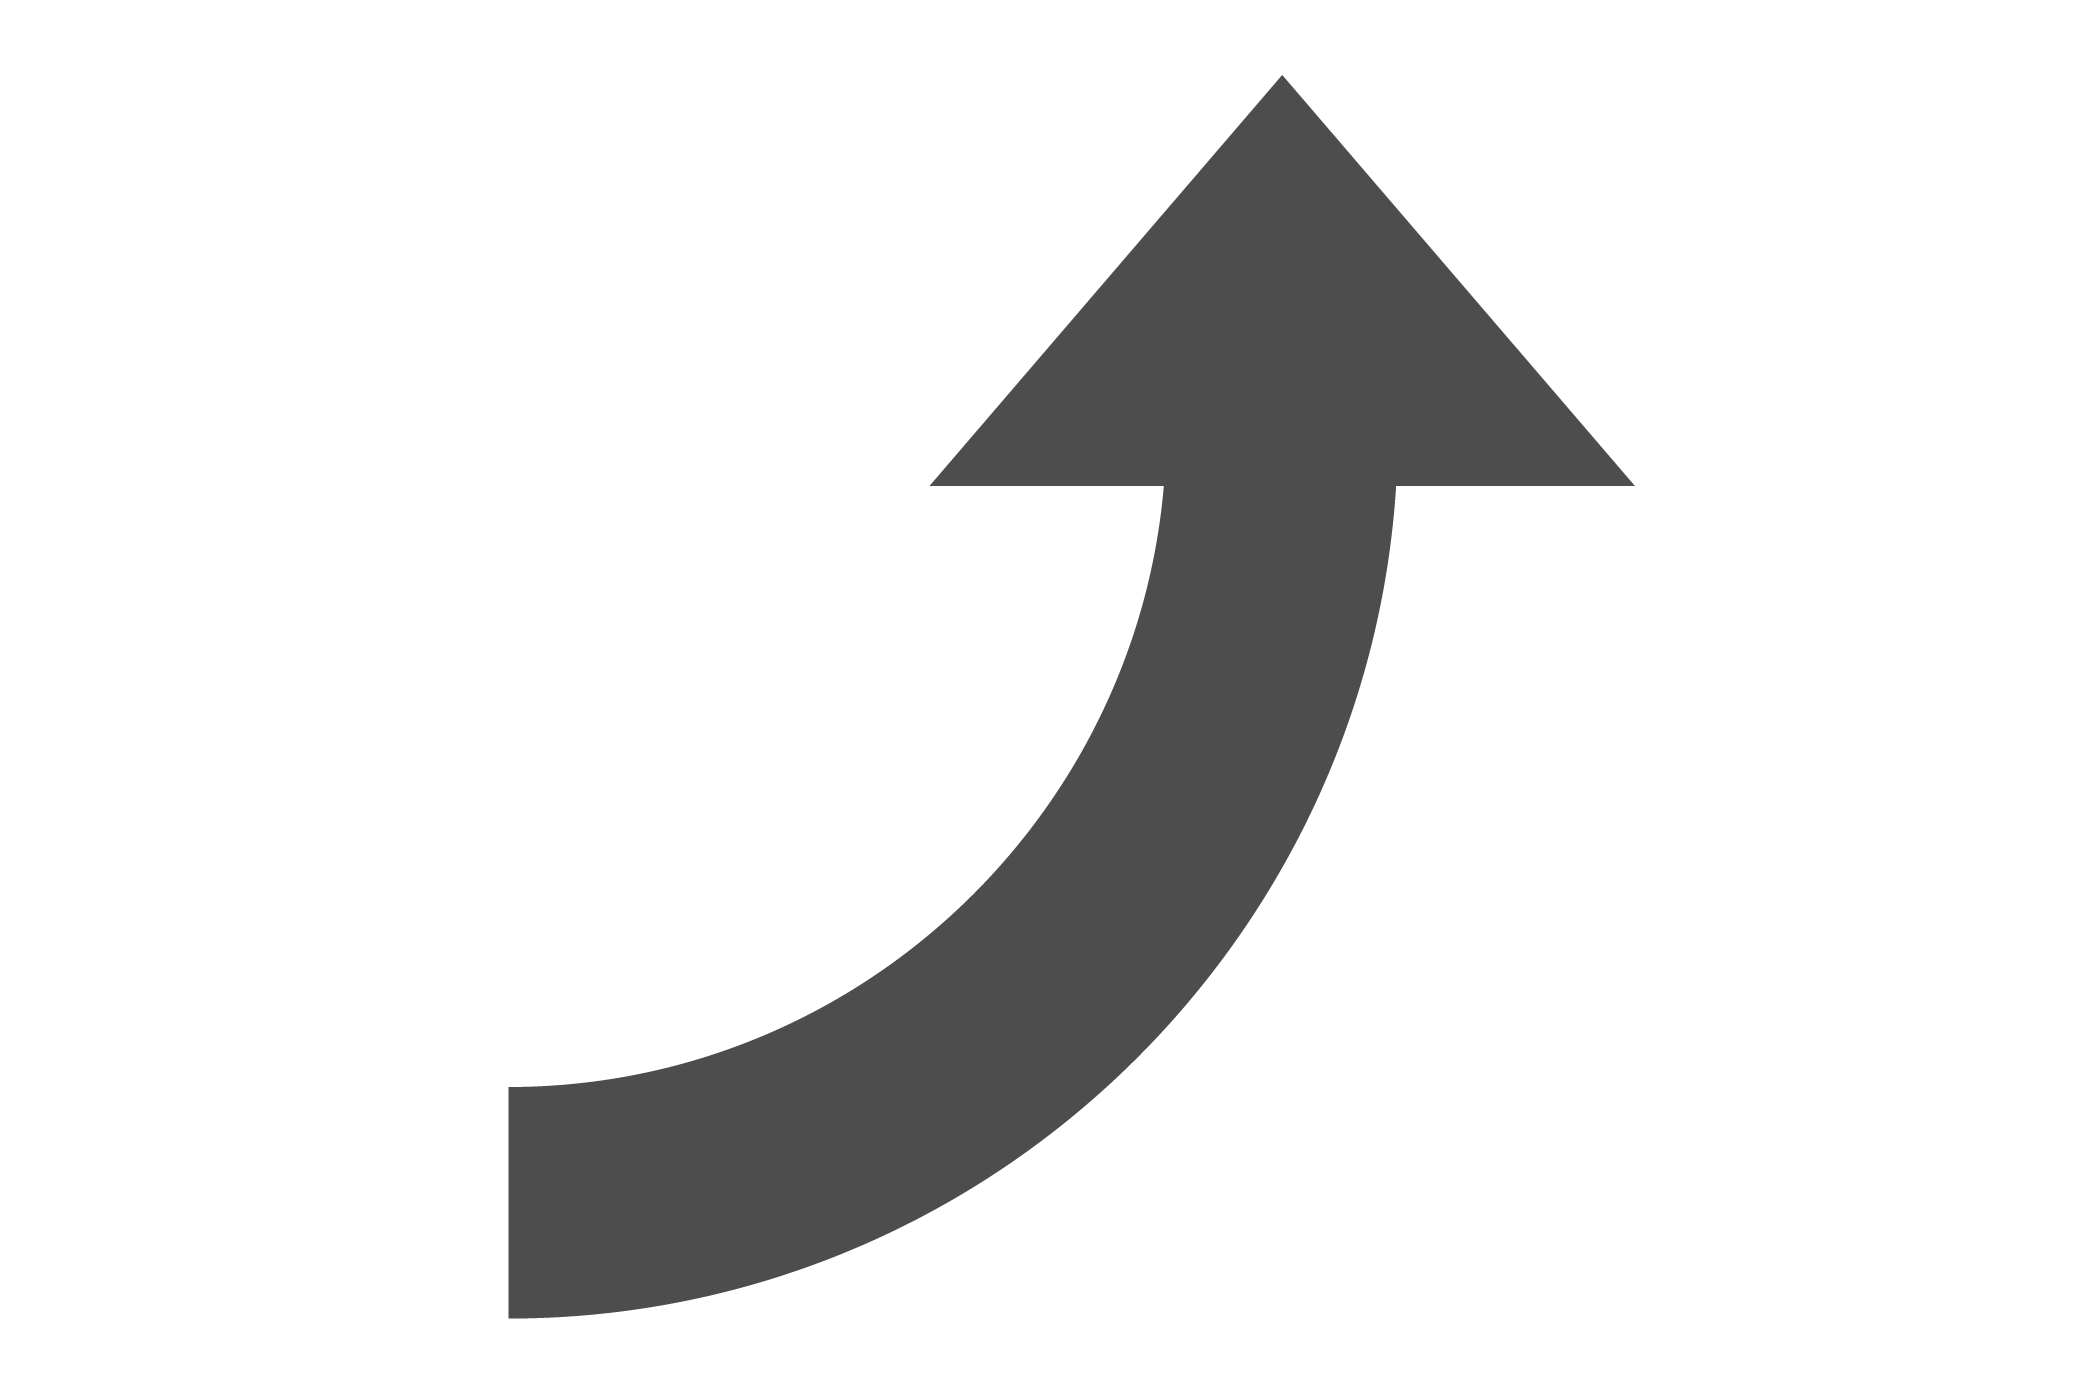 Arrowhead / Black / Design / Business Arrow / Direction / Forward / Clip Art / Vector / Beju Curve / ai File / Edit